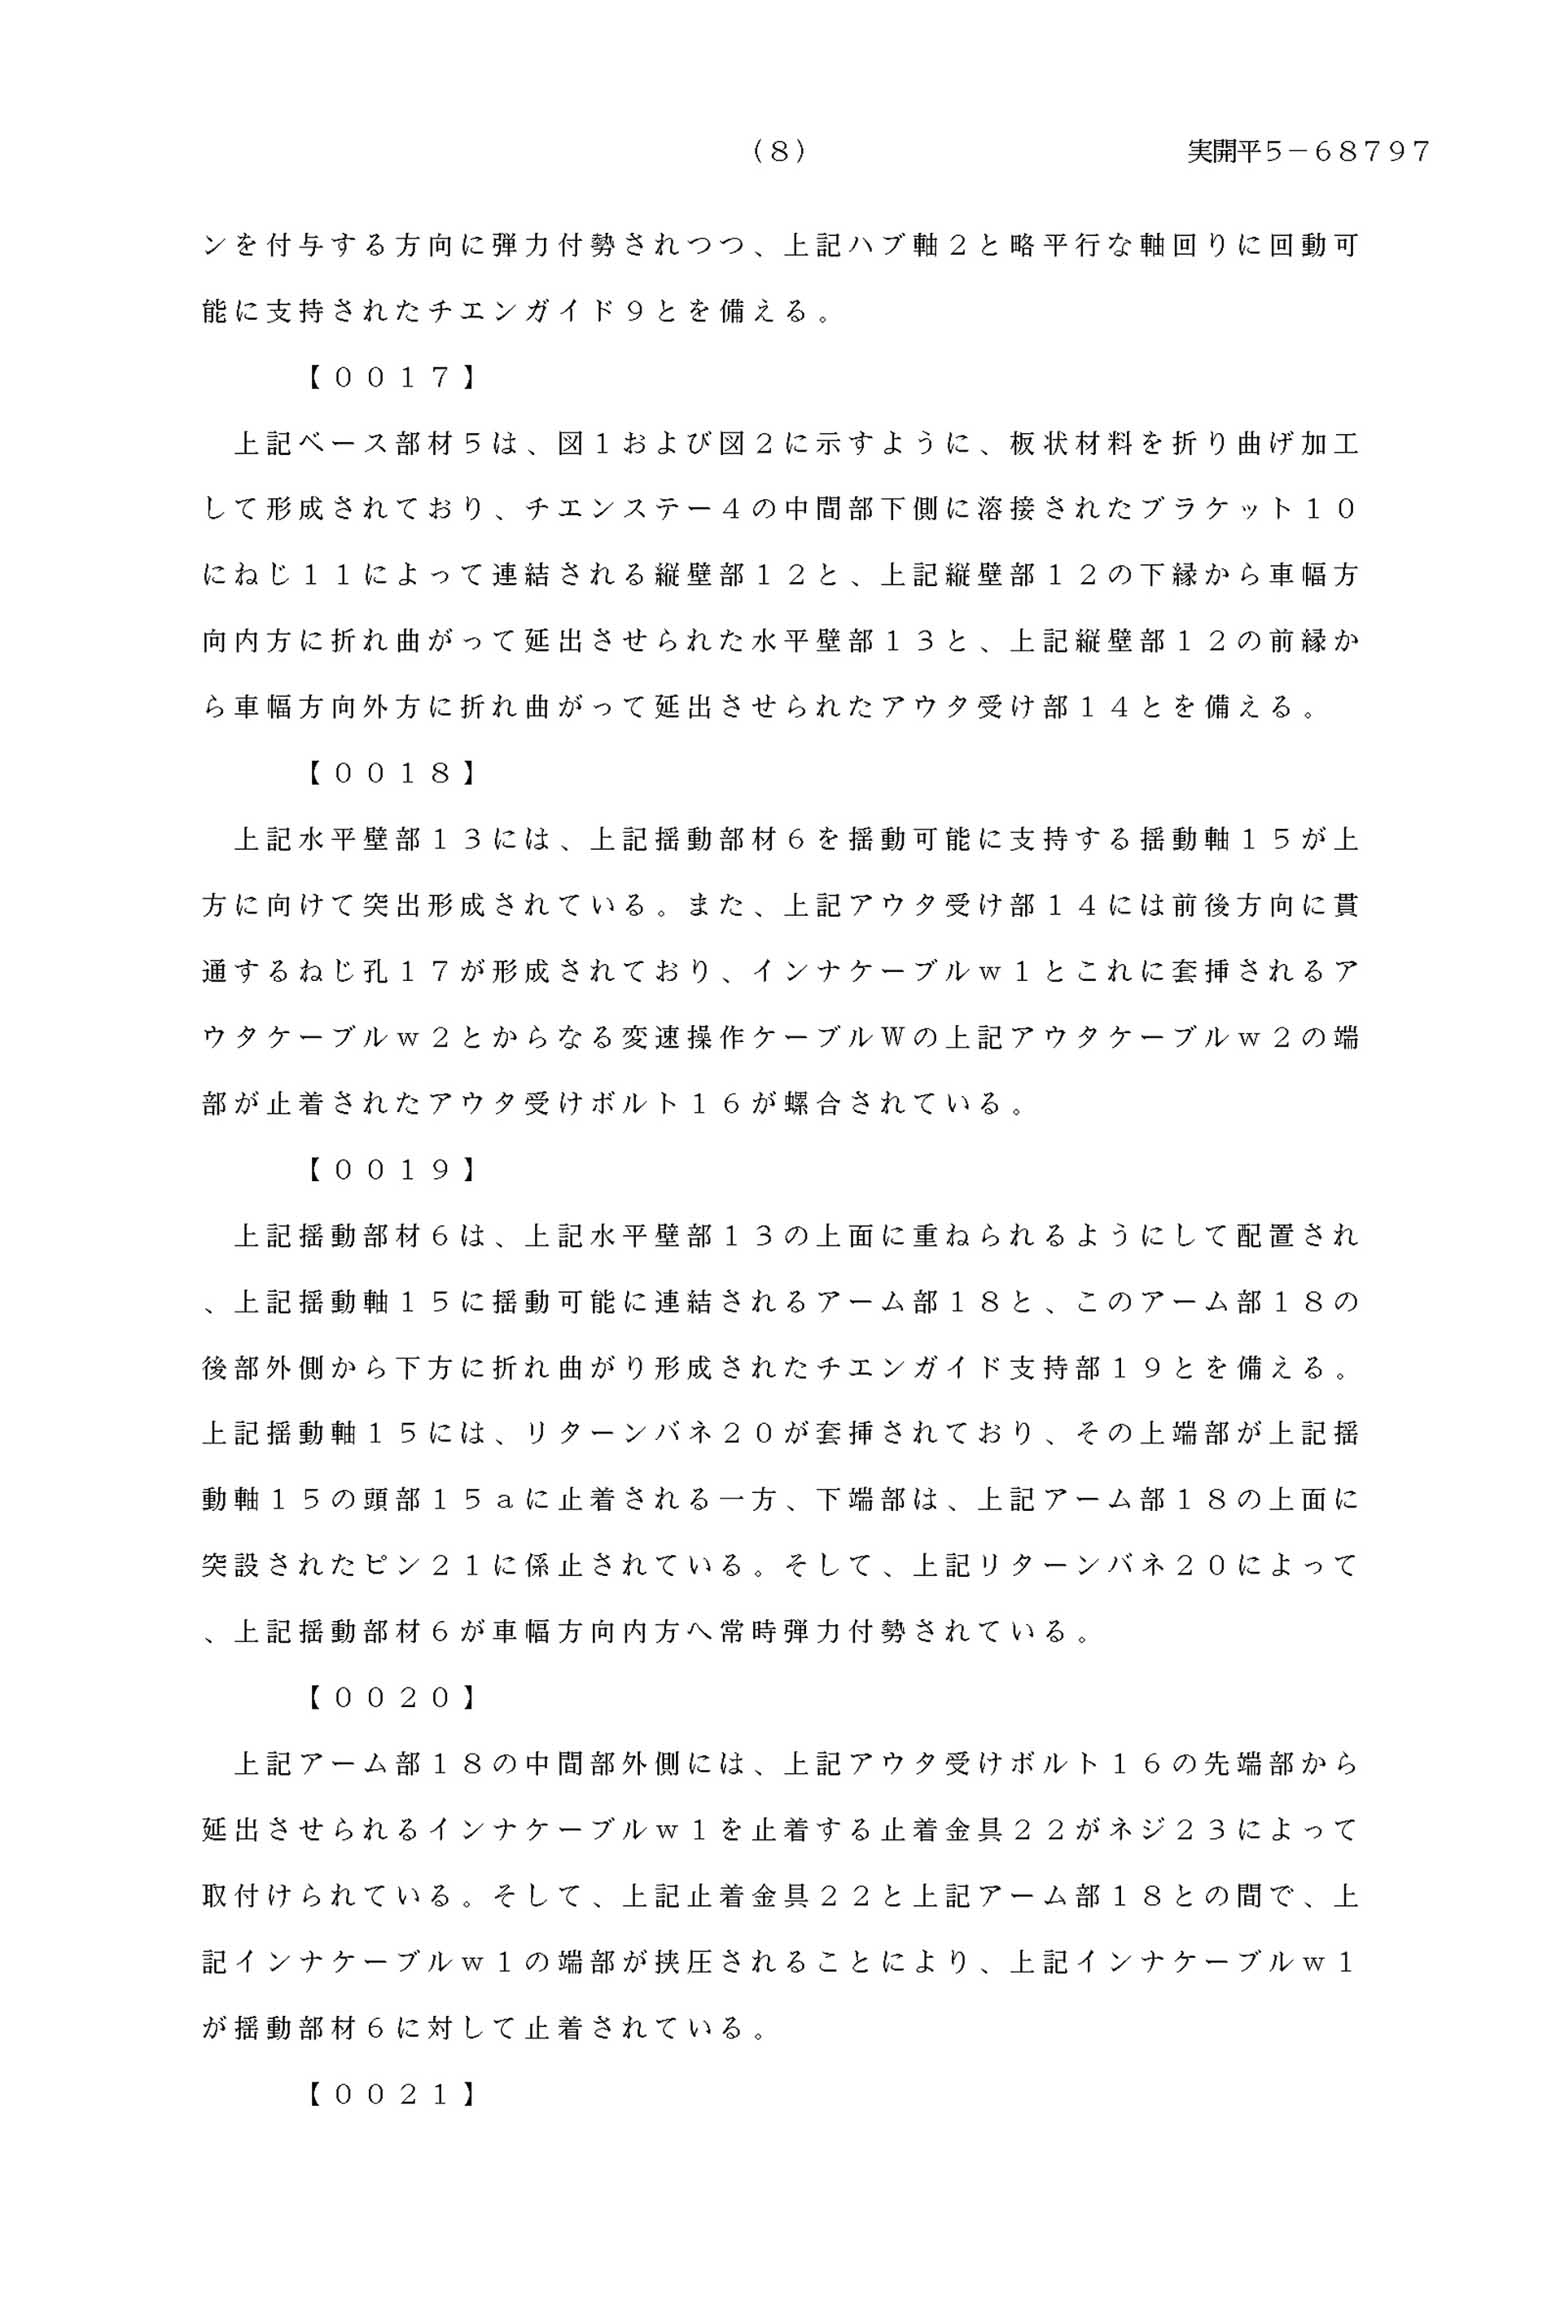 Japanese Patent H5-68797 scan 8 main image